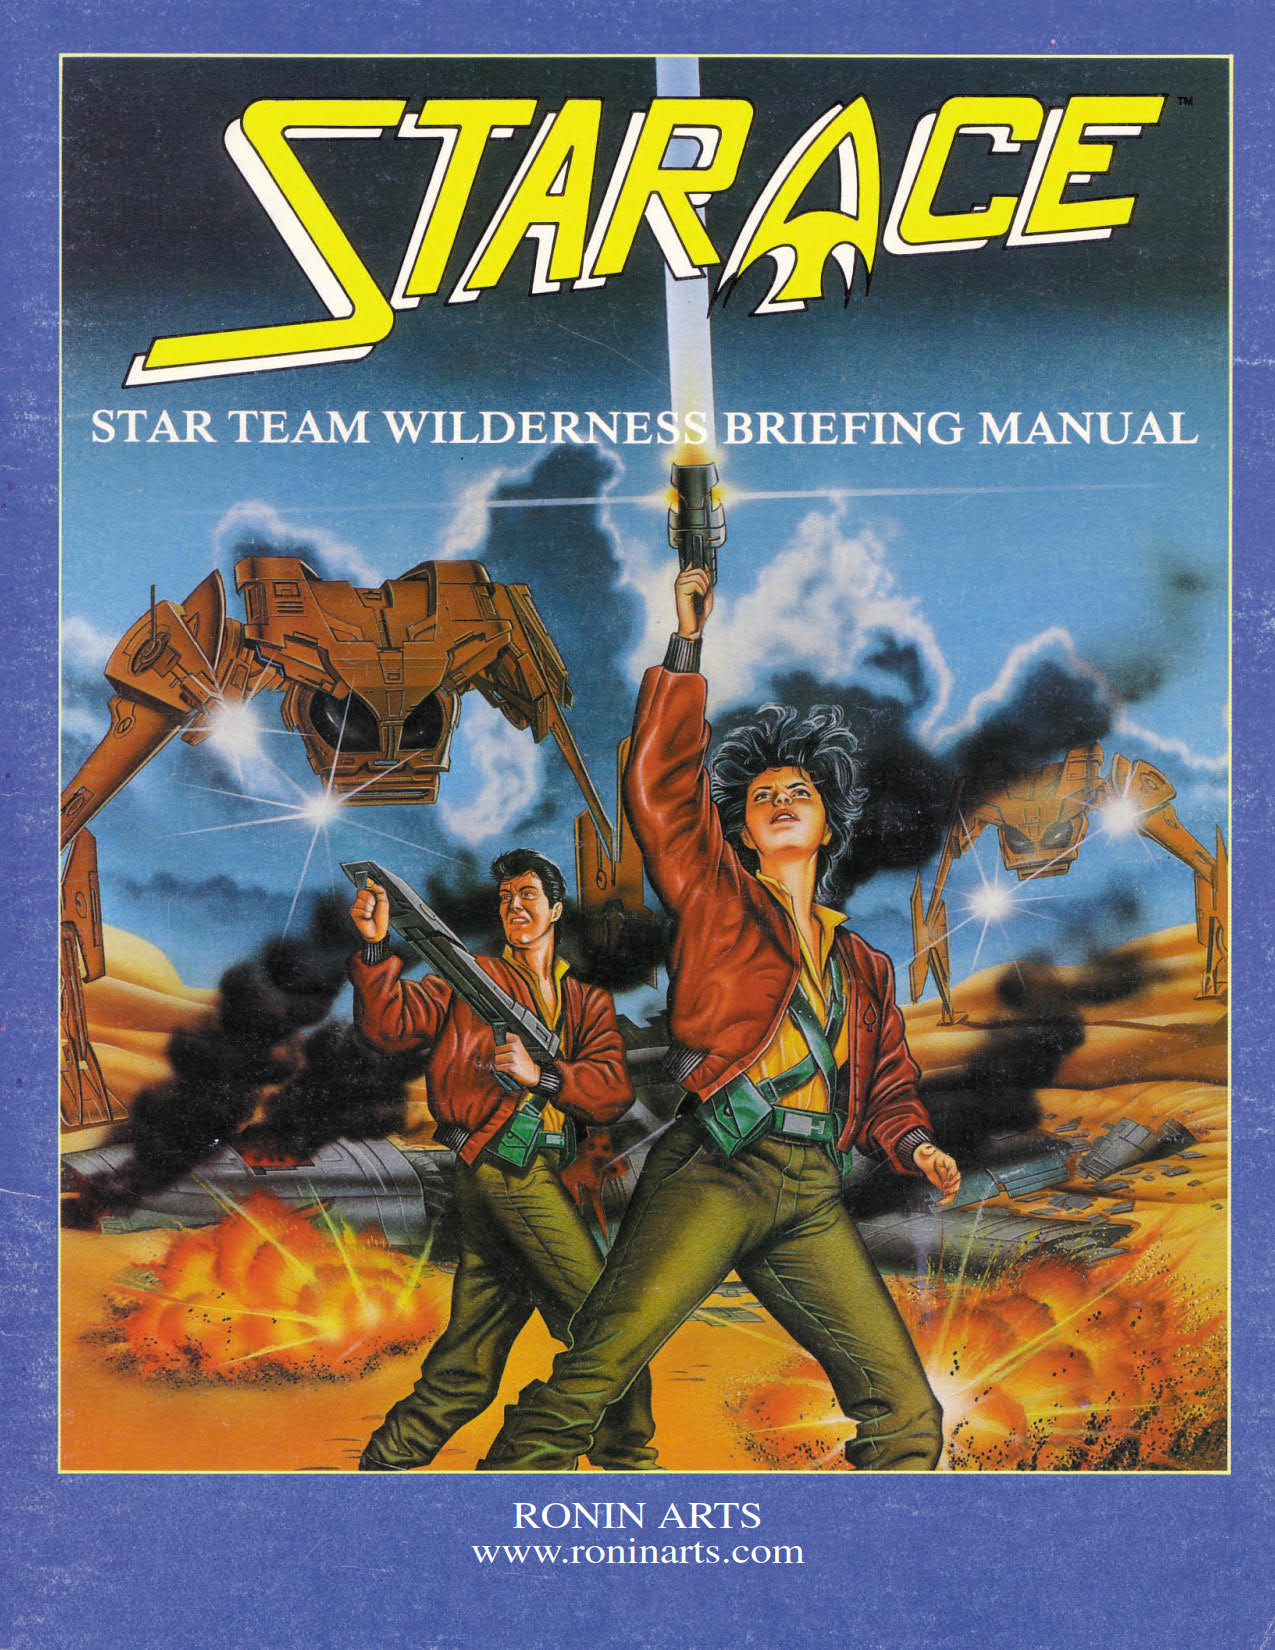 Star Ace Star Team Wilderness Briefing Manual 1.jpg